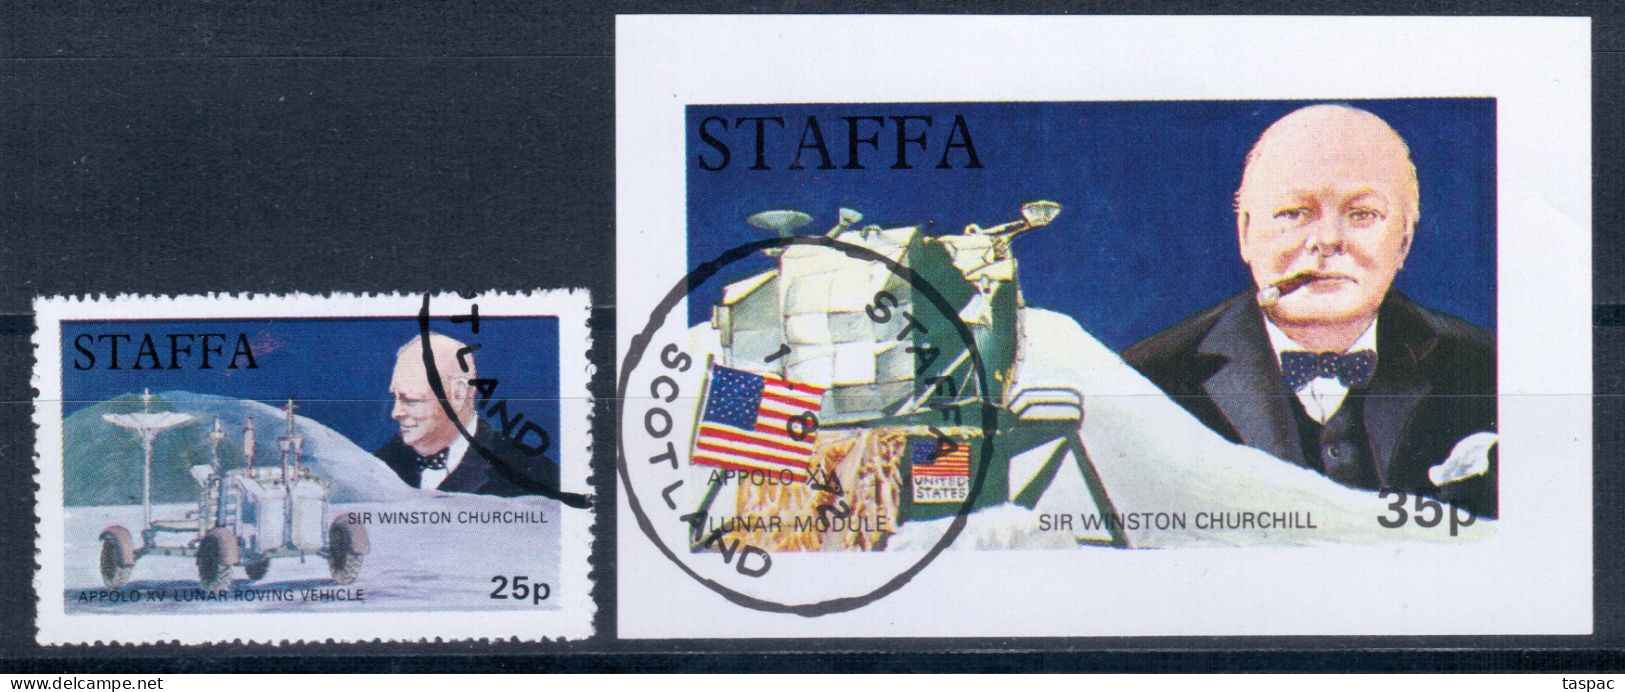 Staffa 1972 P# 33, Souvenir Sheet 6 Used - Churchill / Lunar Vehicle / Apollo 15 / Space - Emissions Locales